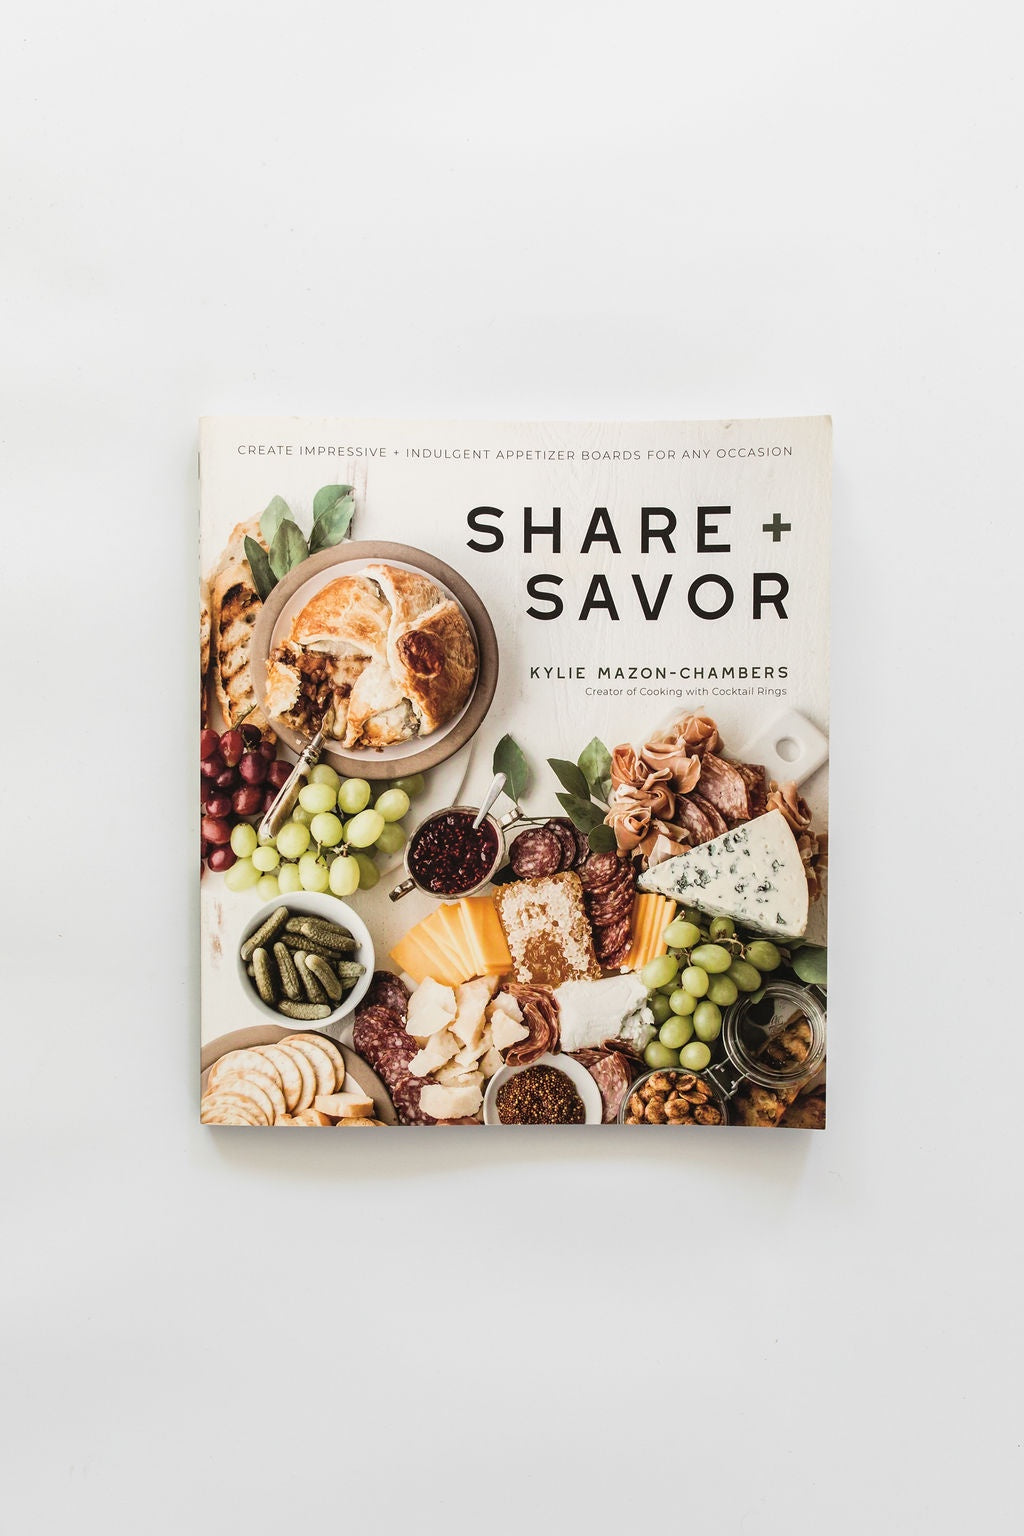 Share + Savor  by Kylie Mazon-Chambers